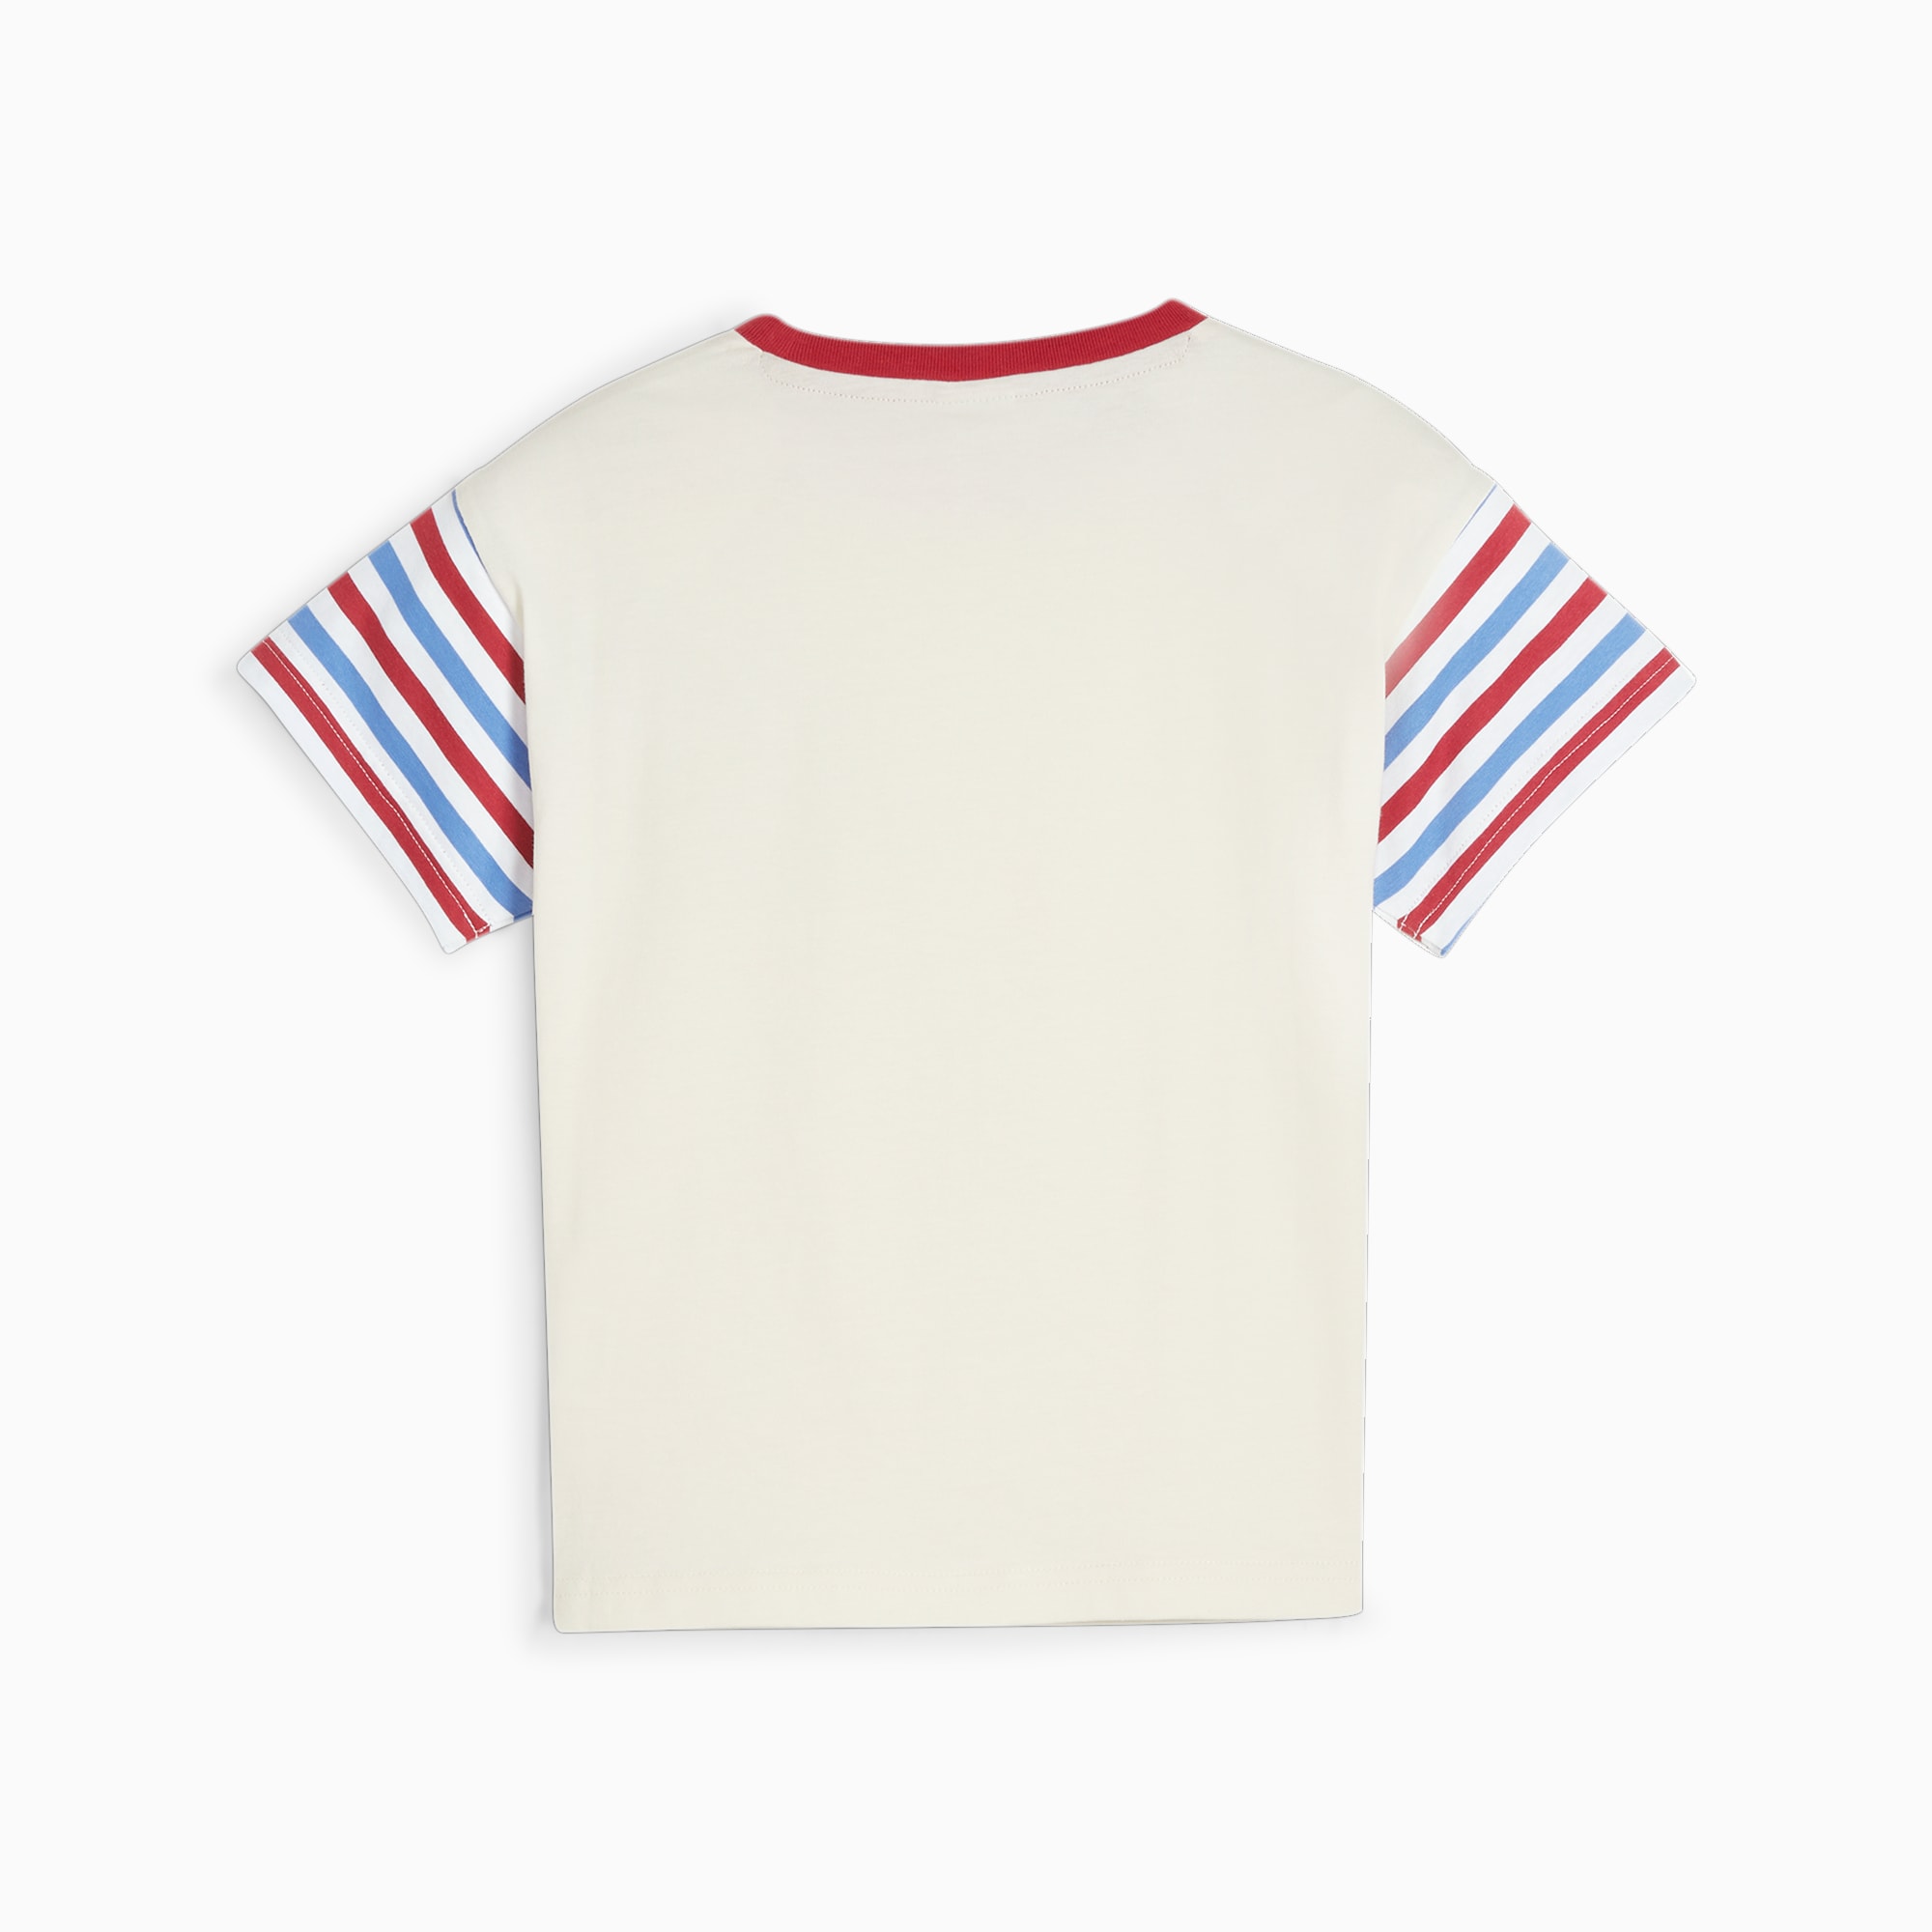 PUMA Summer Camp Classics Kids' T-Shirt, Sugared Almond, Size 92, Clothing